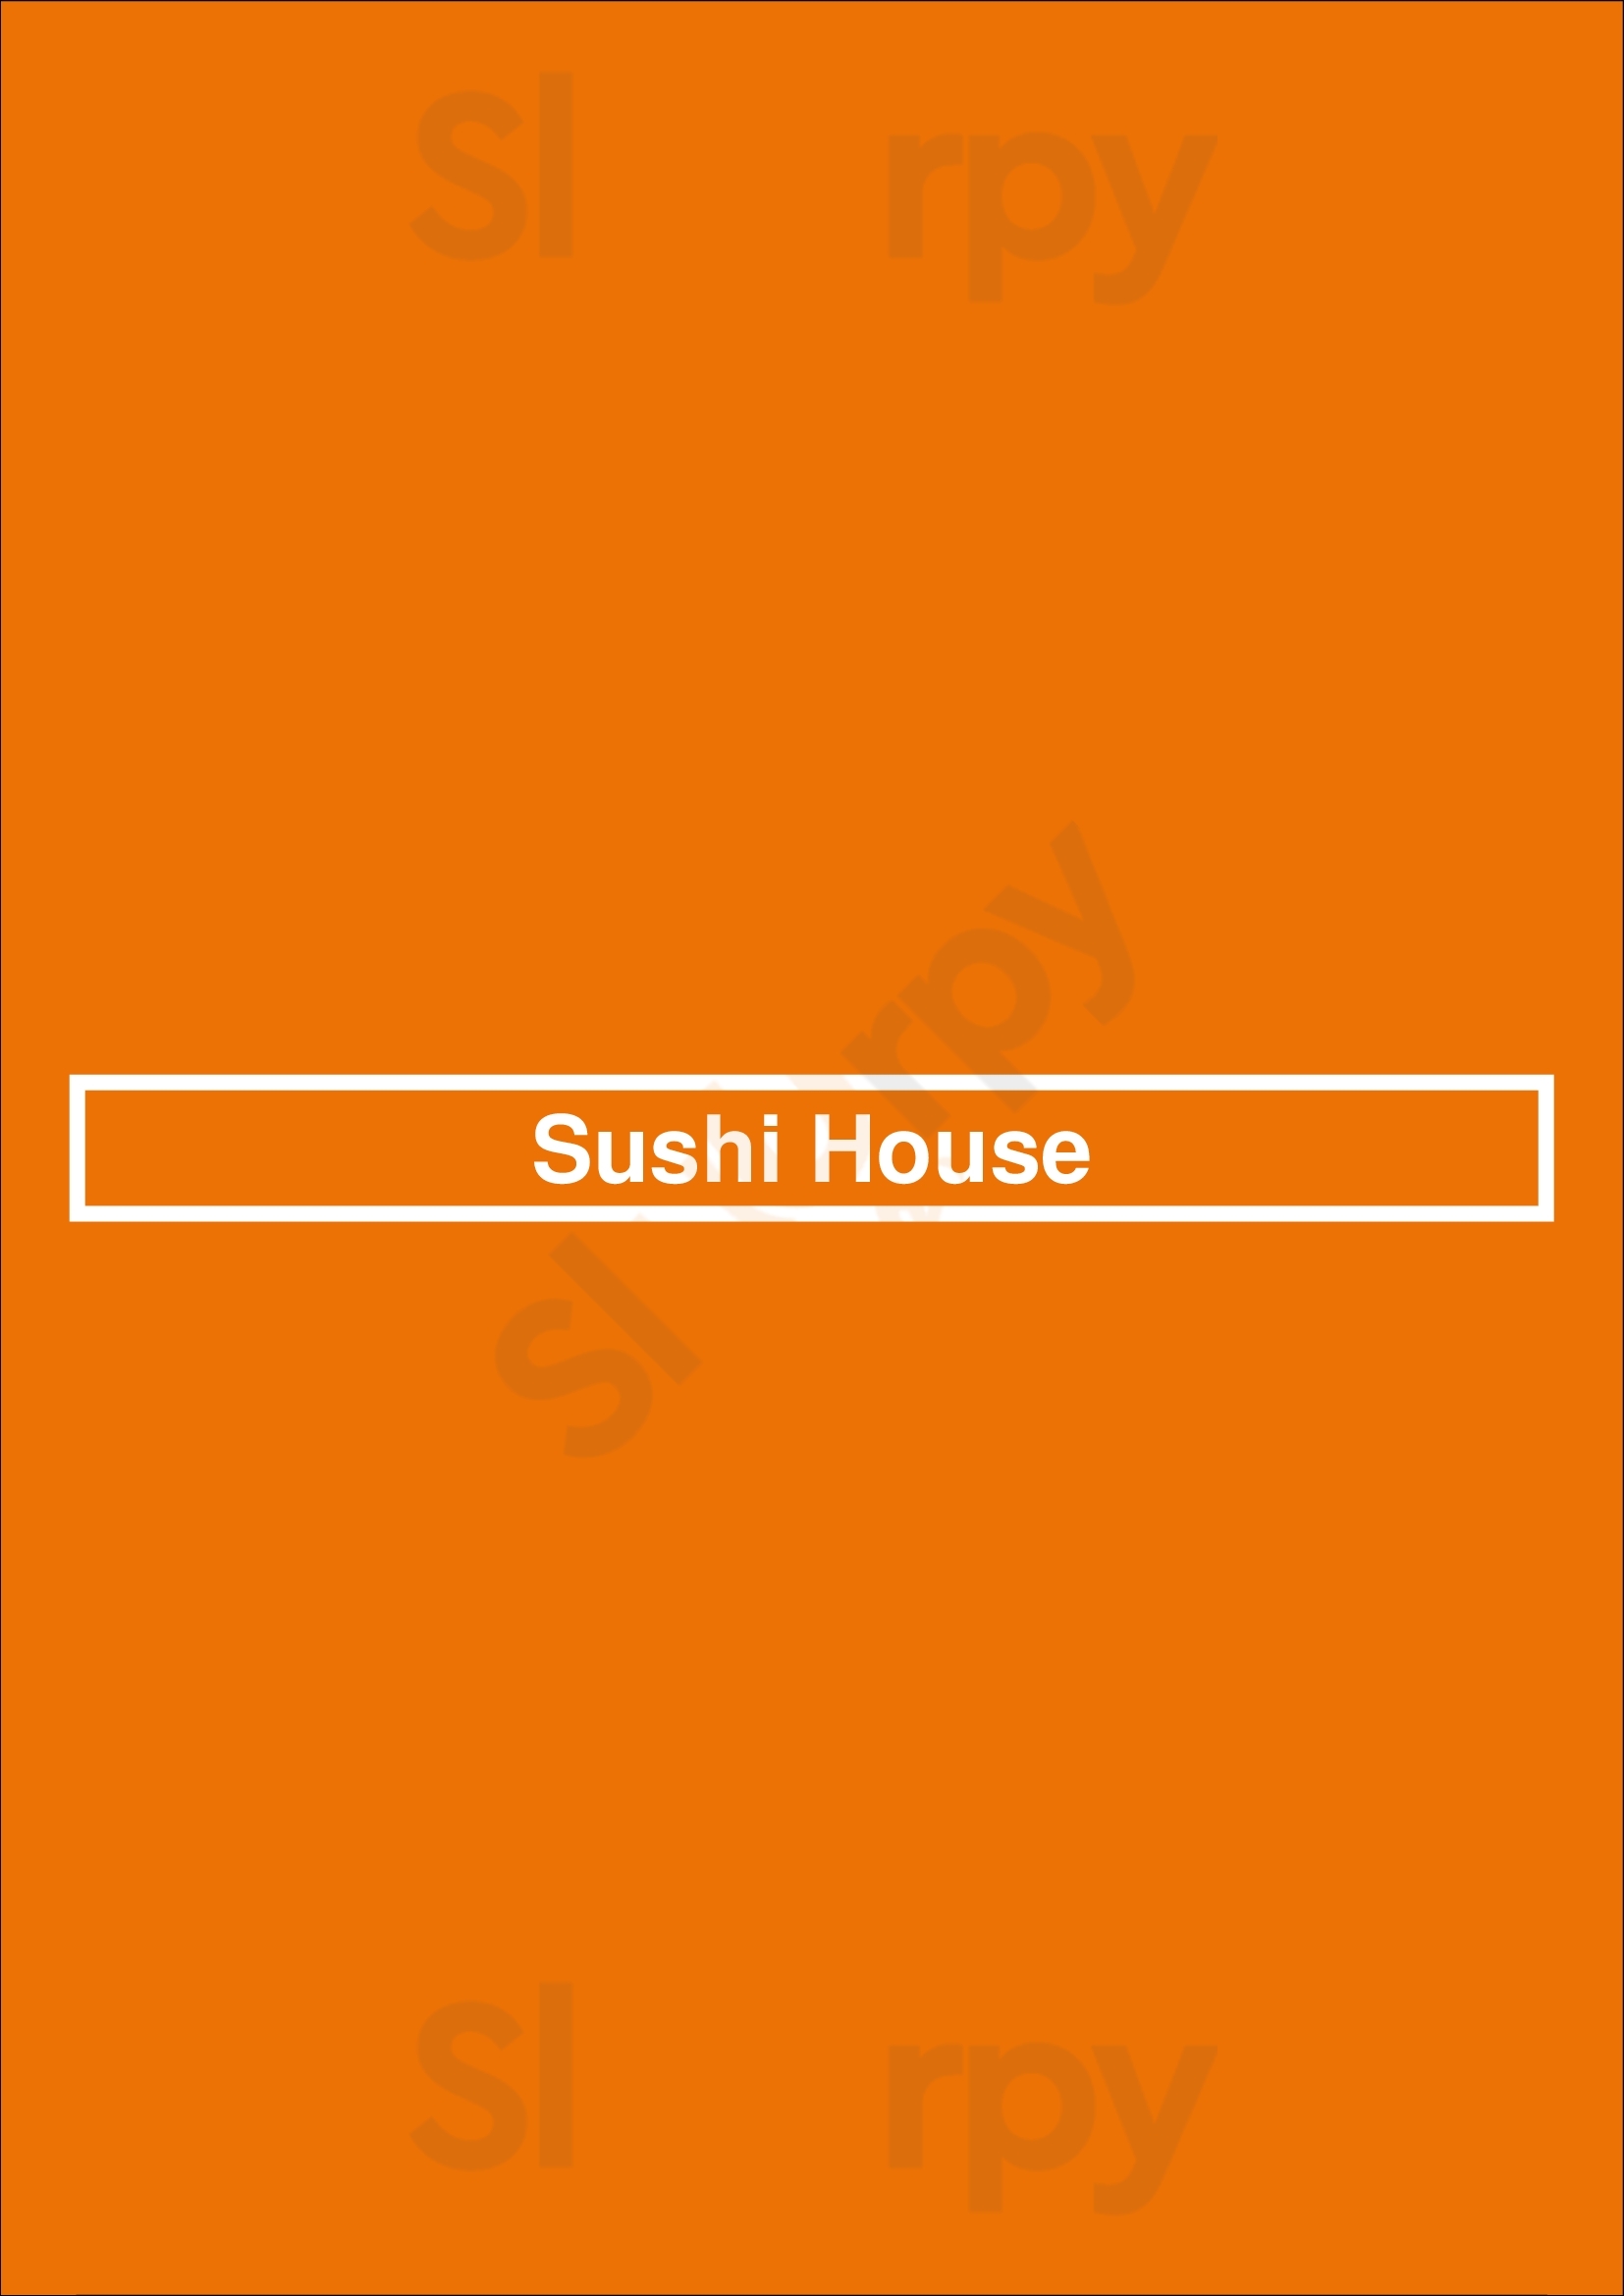 Sushi House Jacksonville Menu - 1